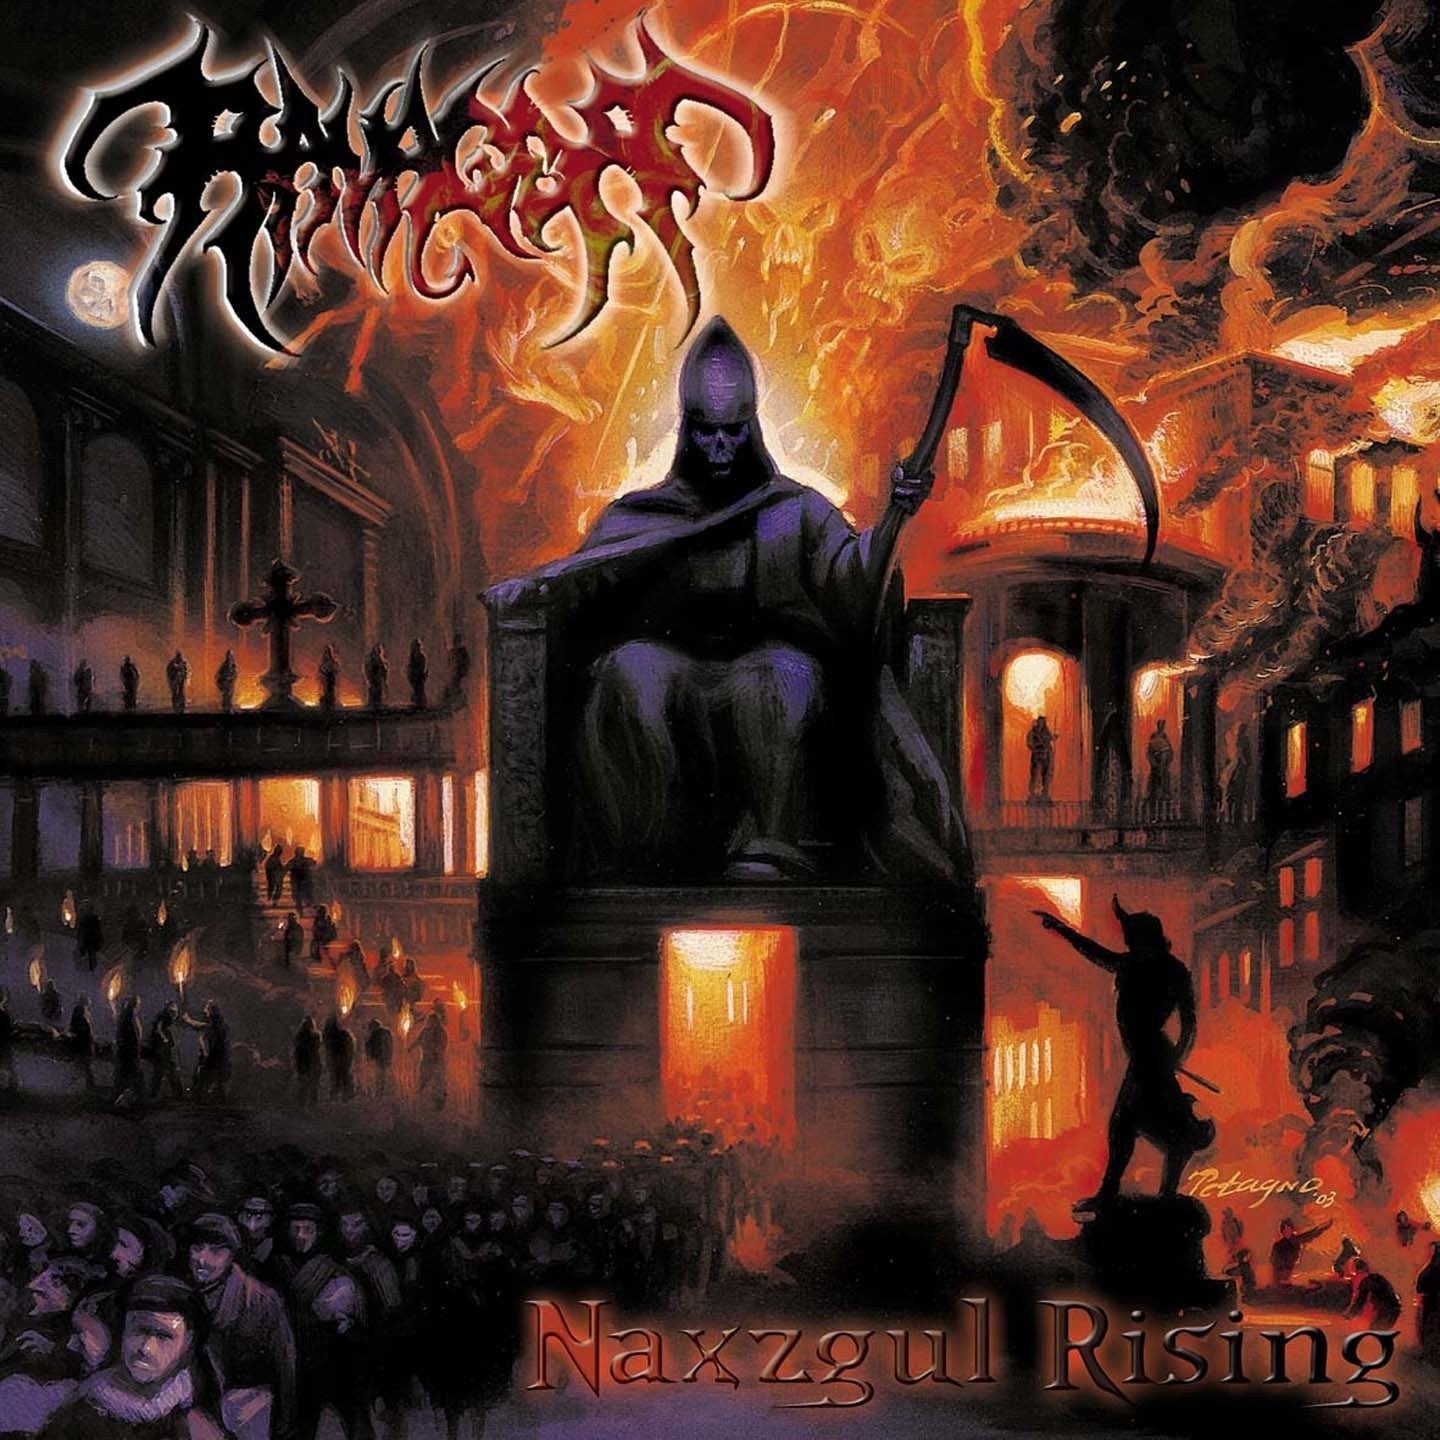 RAVAGER - Naxzgul Rising CD